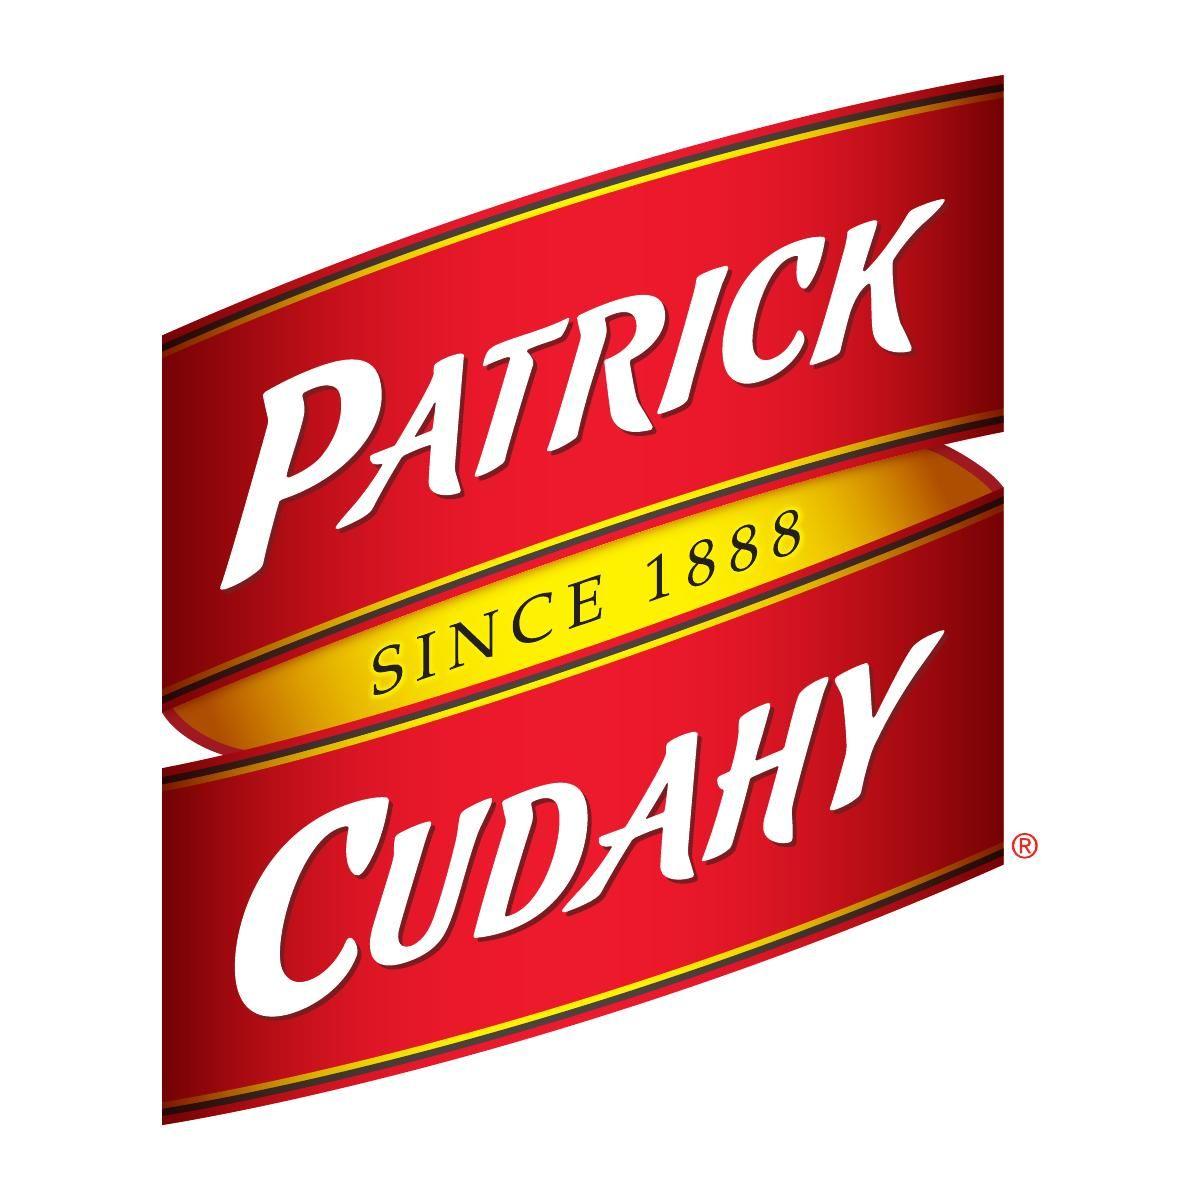 Patrick Logo - Patrick Cudahy logo | | thetandd.com